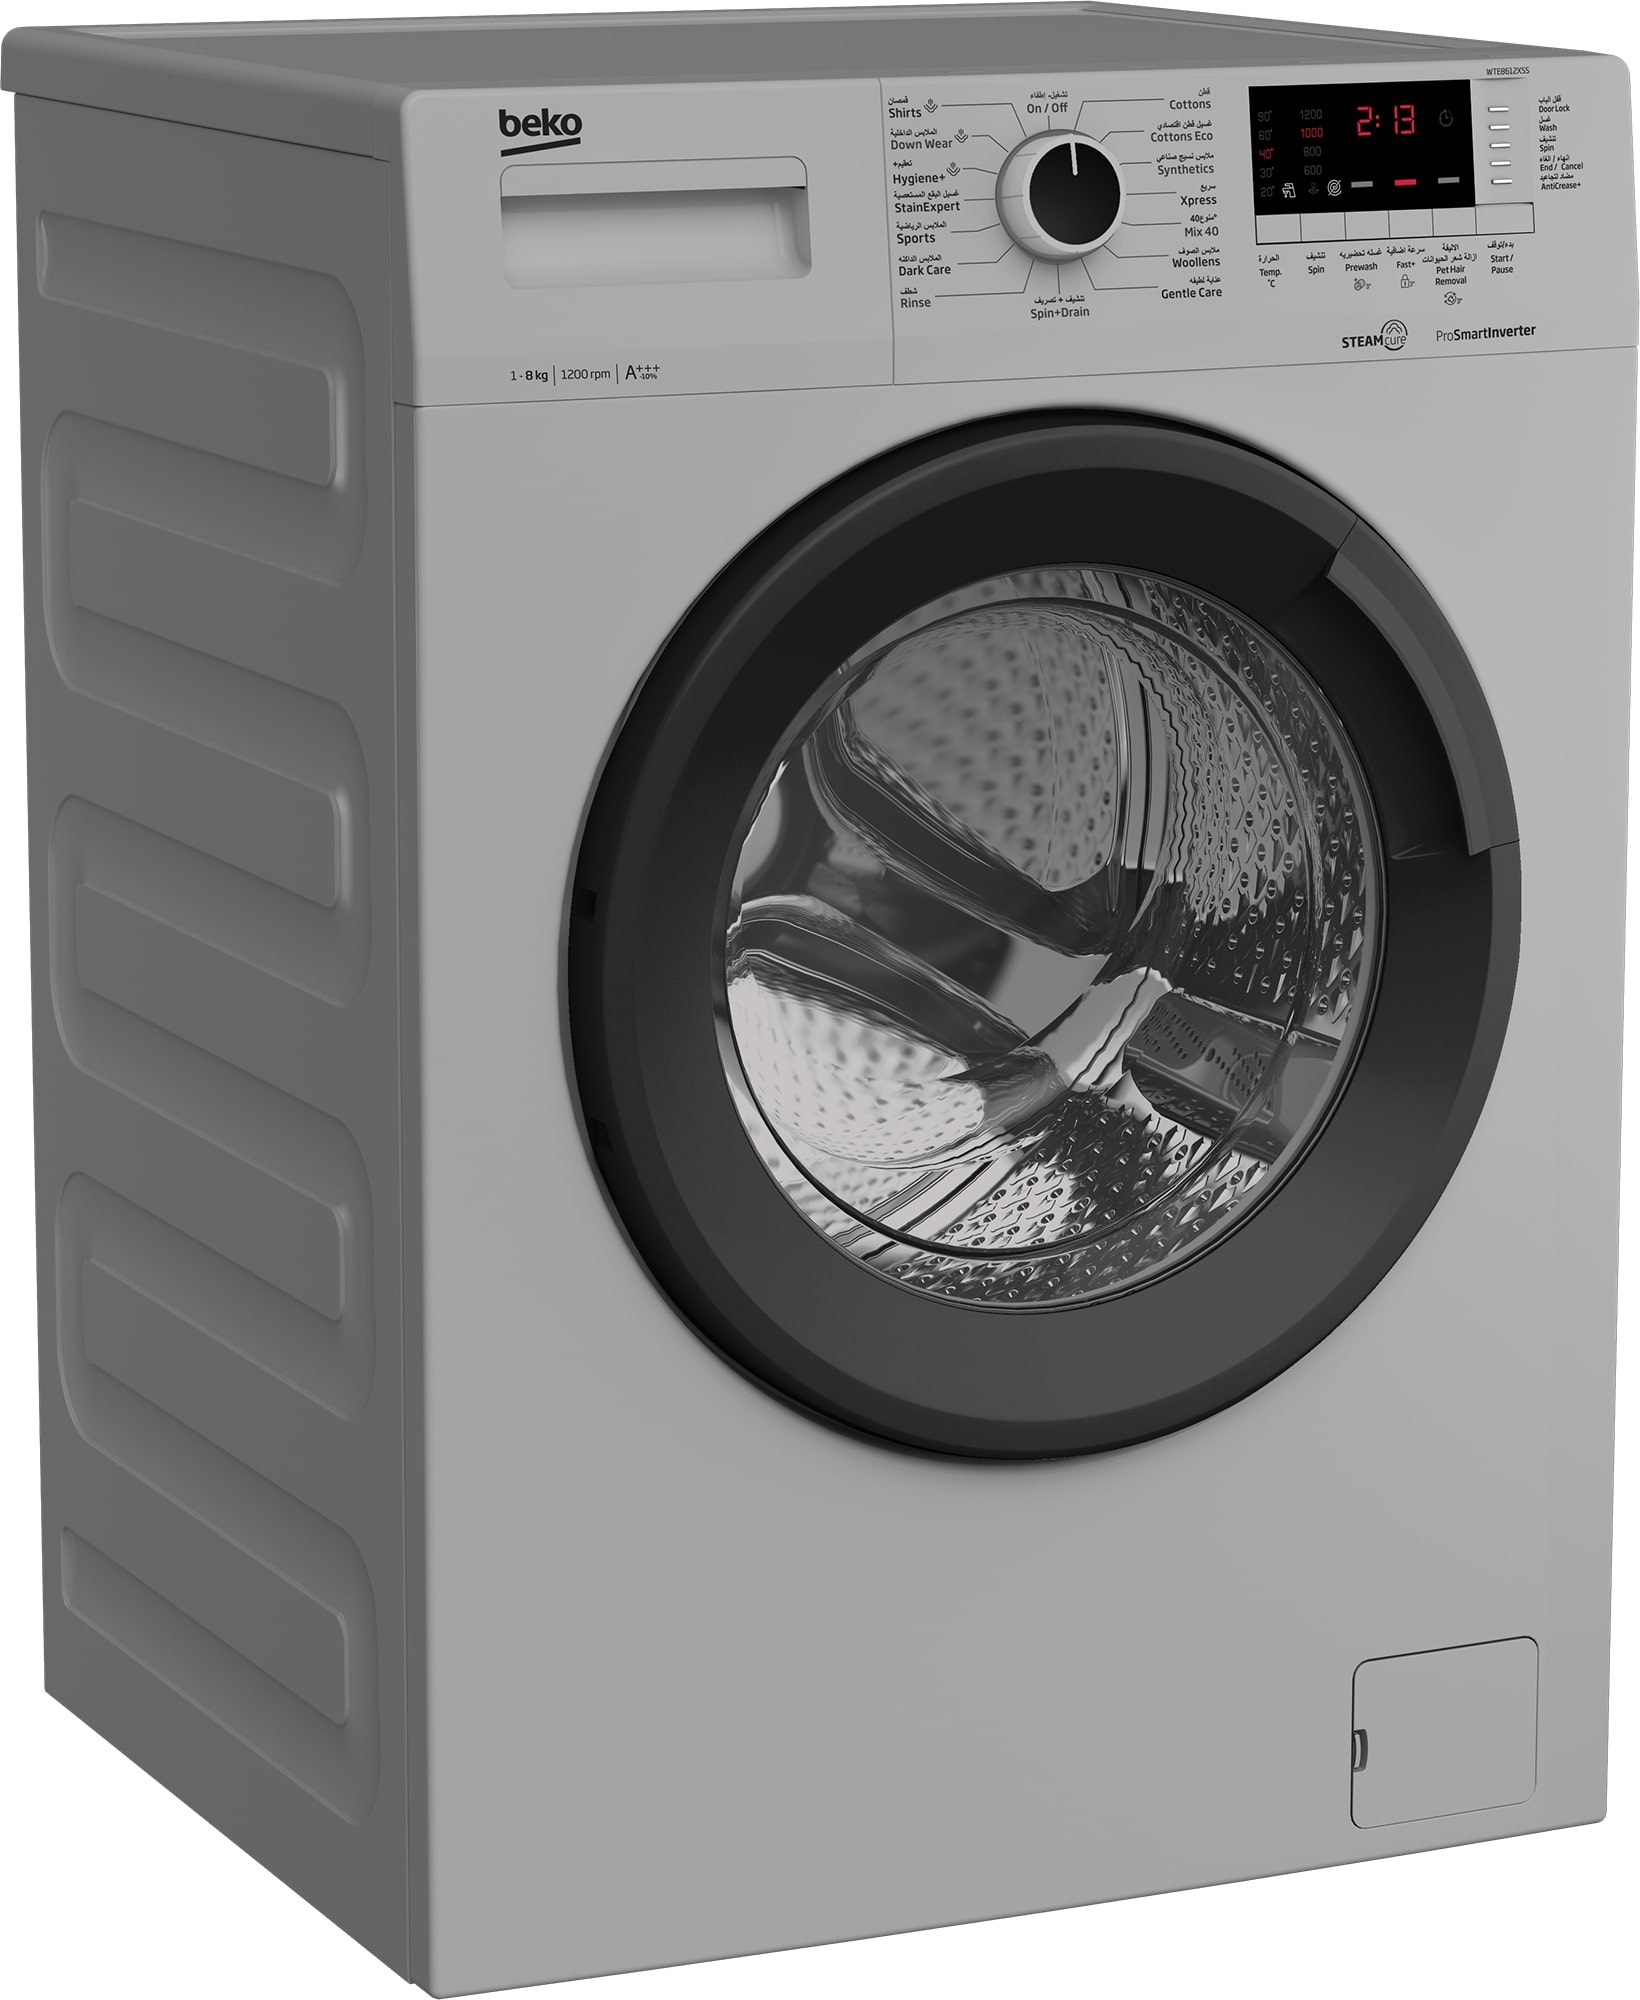 Beko Washing Machine 8 kg 1200 rpm - Silver